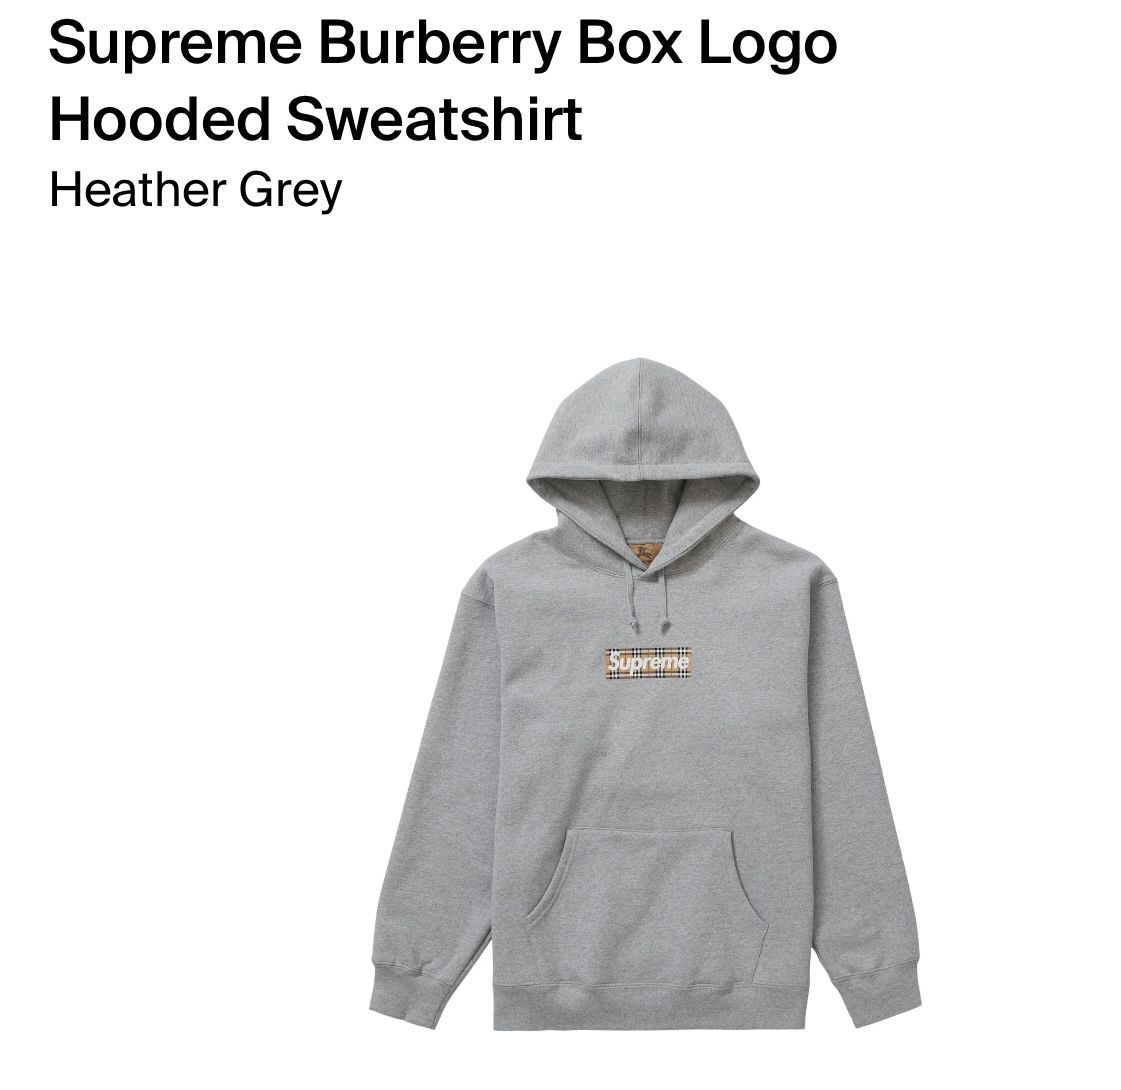 Supreme Burberry Box Logo Hooded Sweatshirt Size Large 